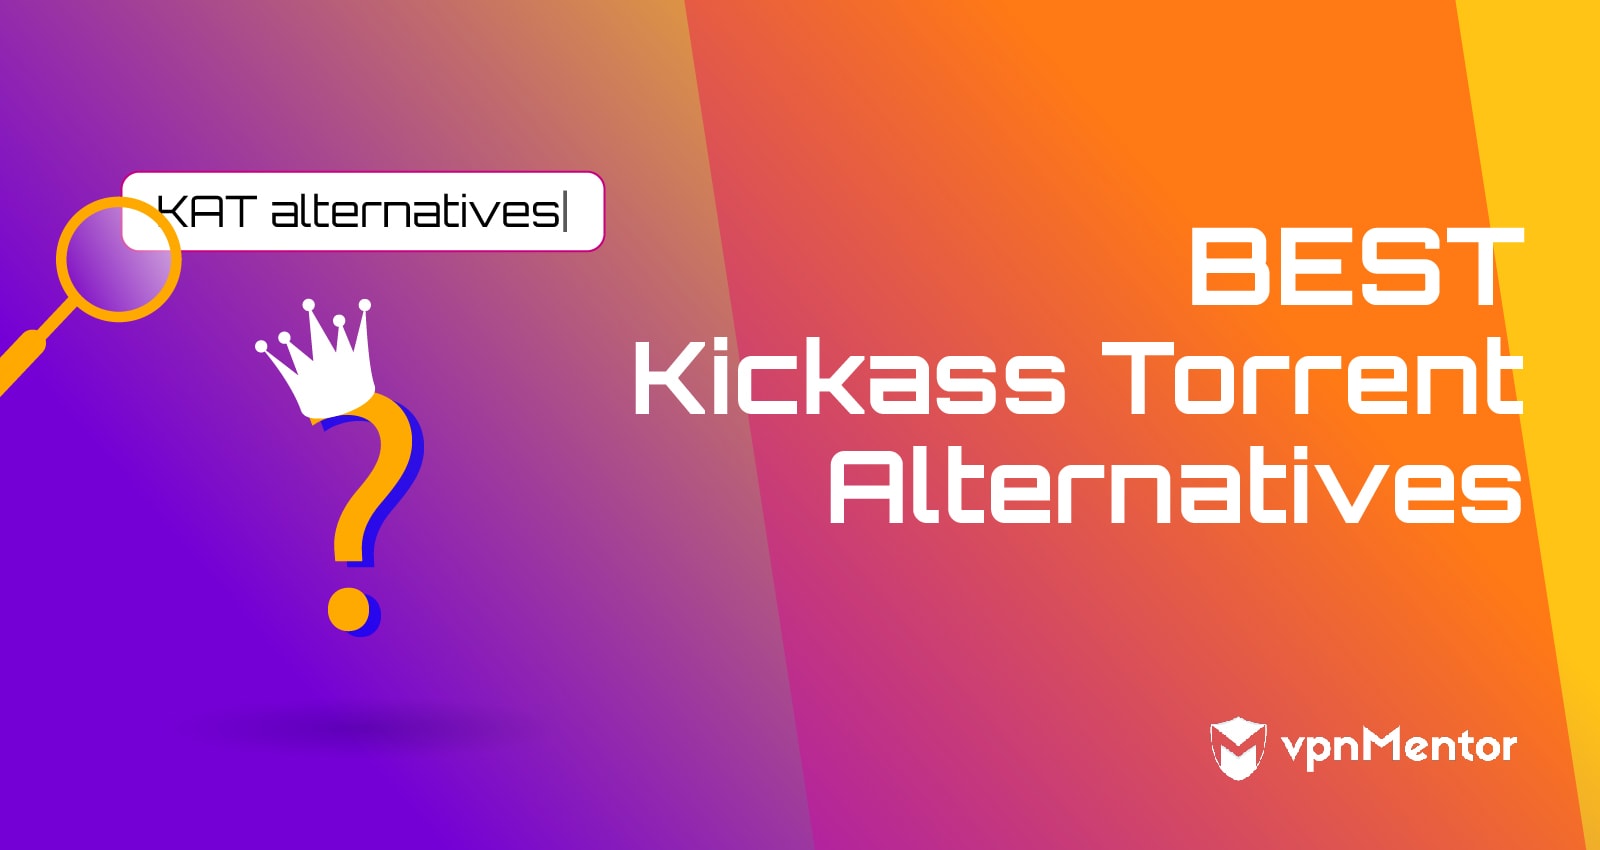 7 Best Kickass Torrents Alternatives That Work in 2022 [& Are SAFE]